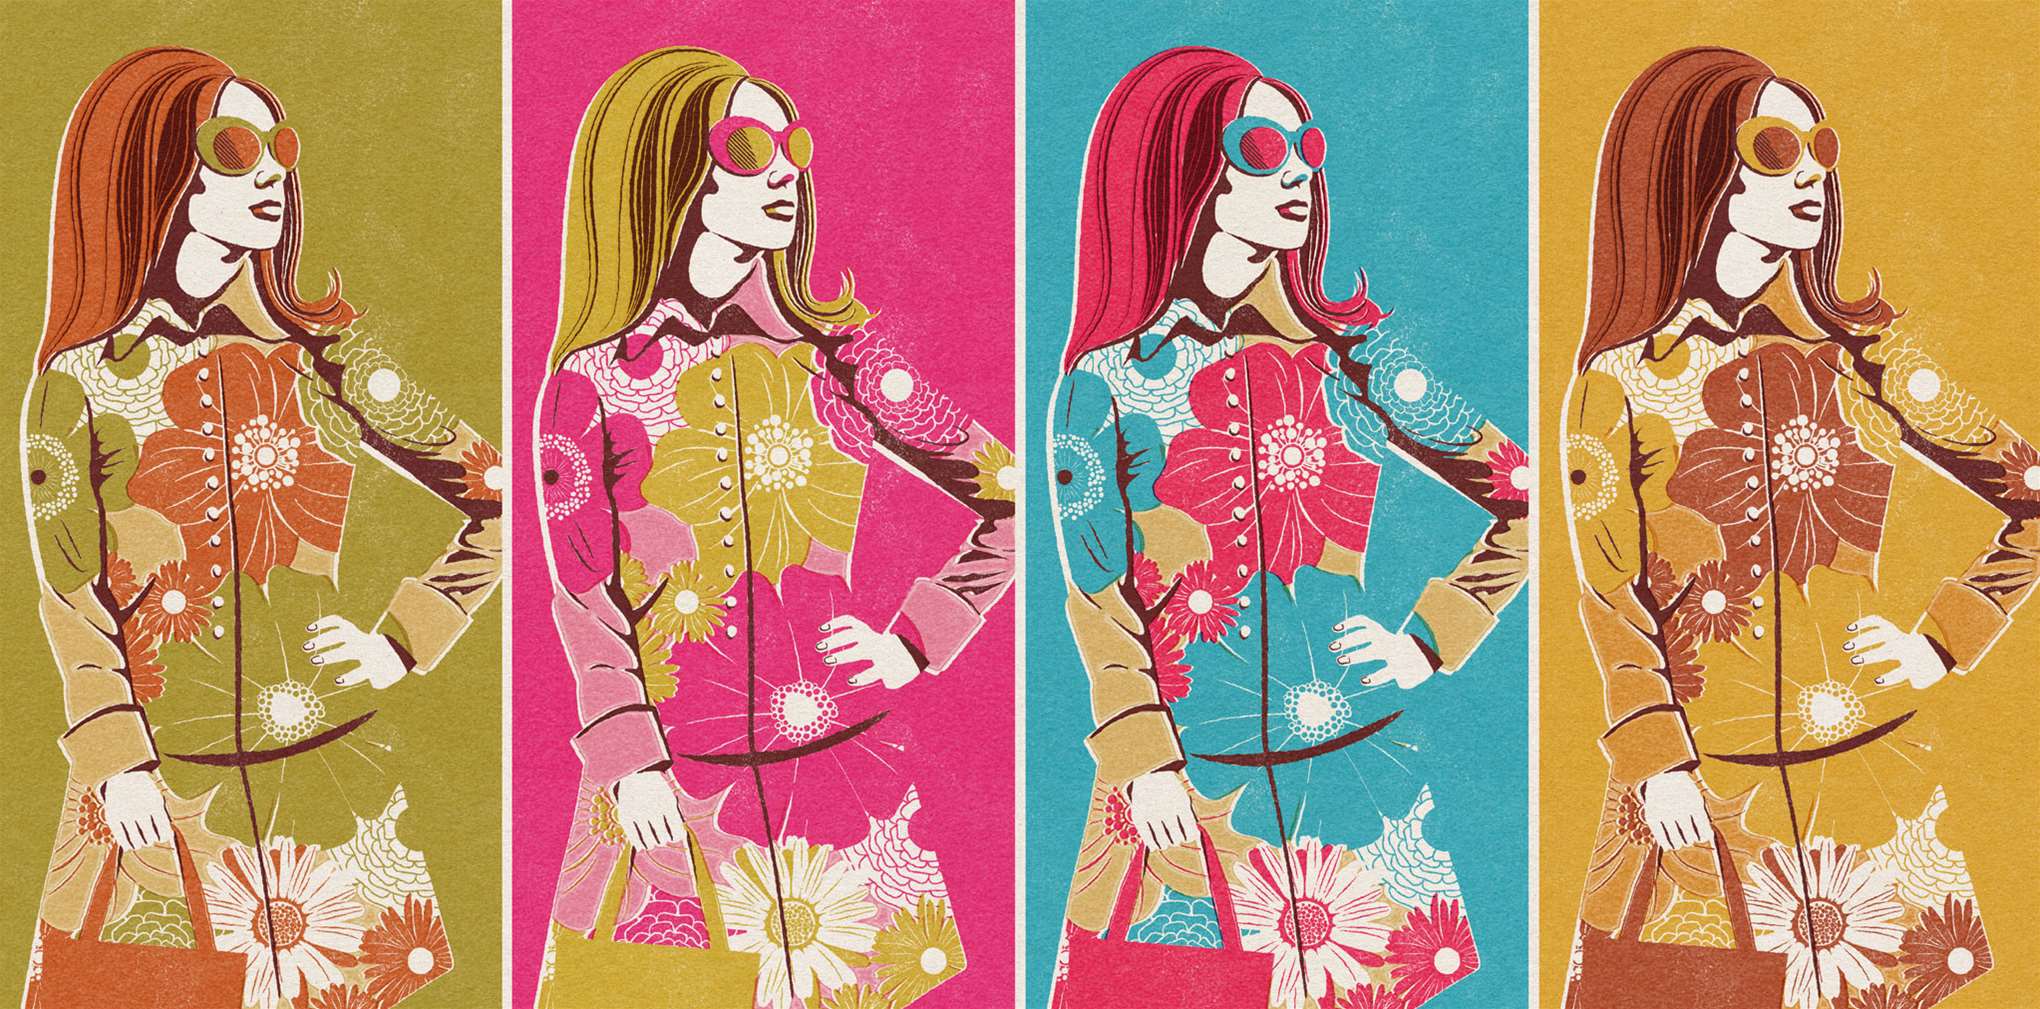 Susan Burghart, Art pop, retro illustration pattern.